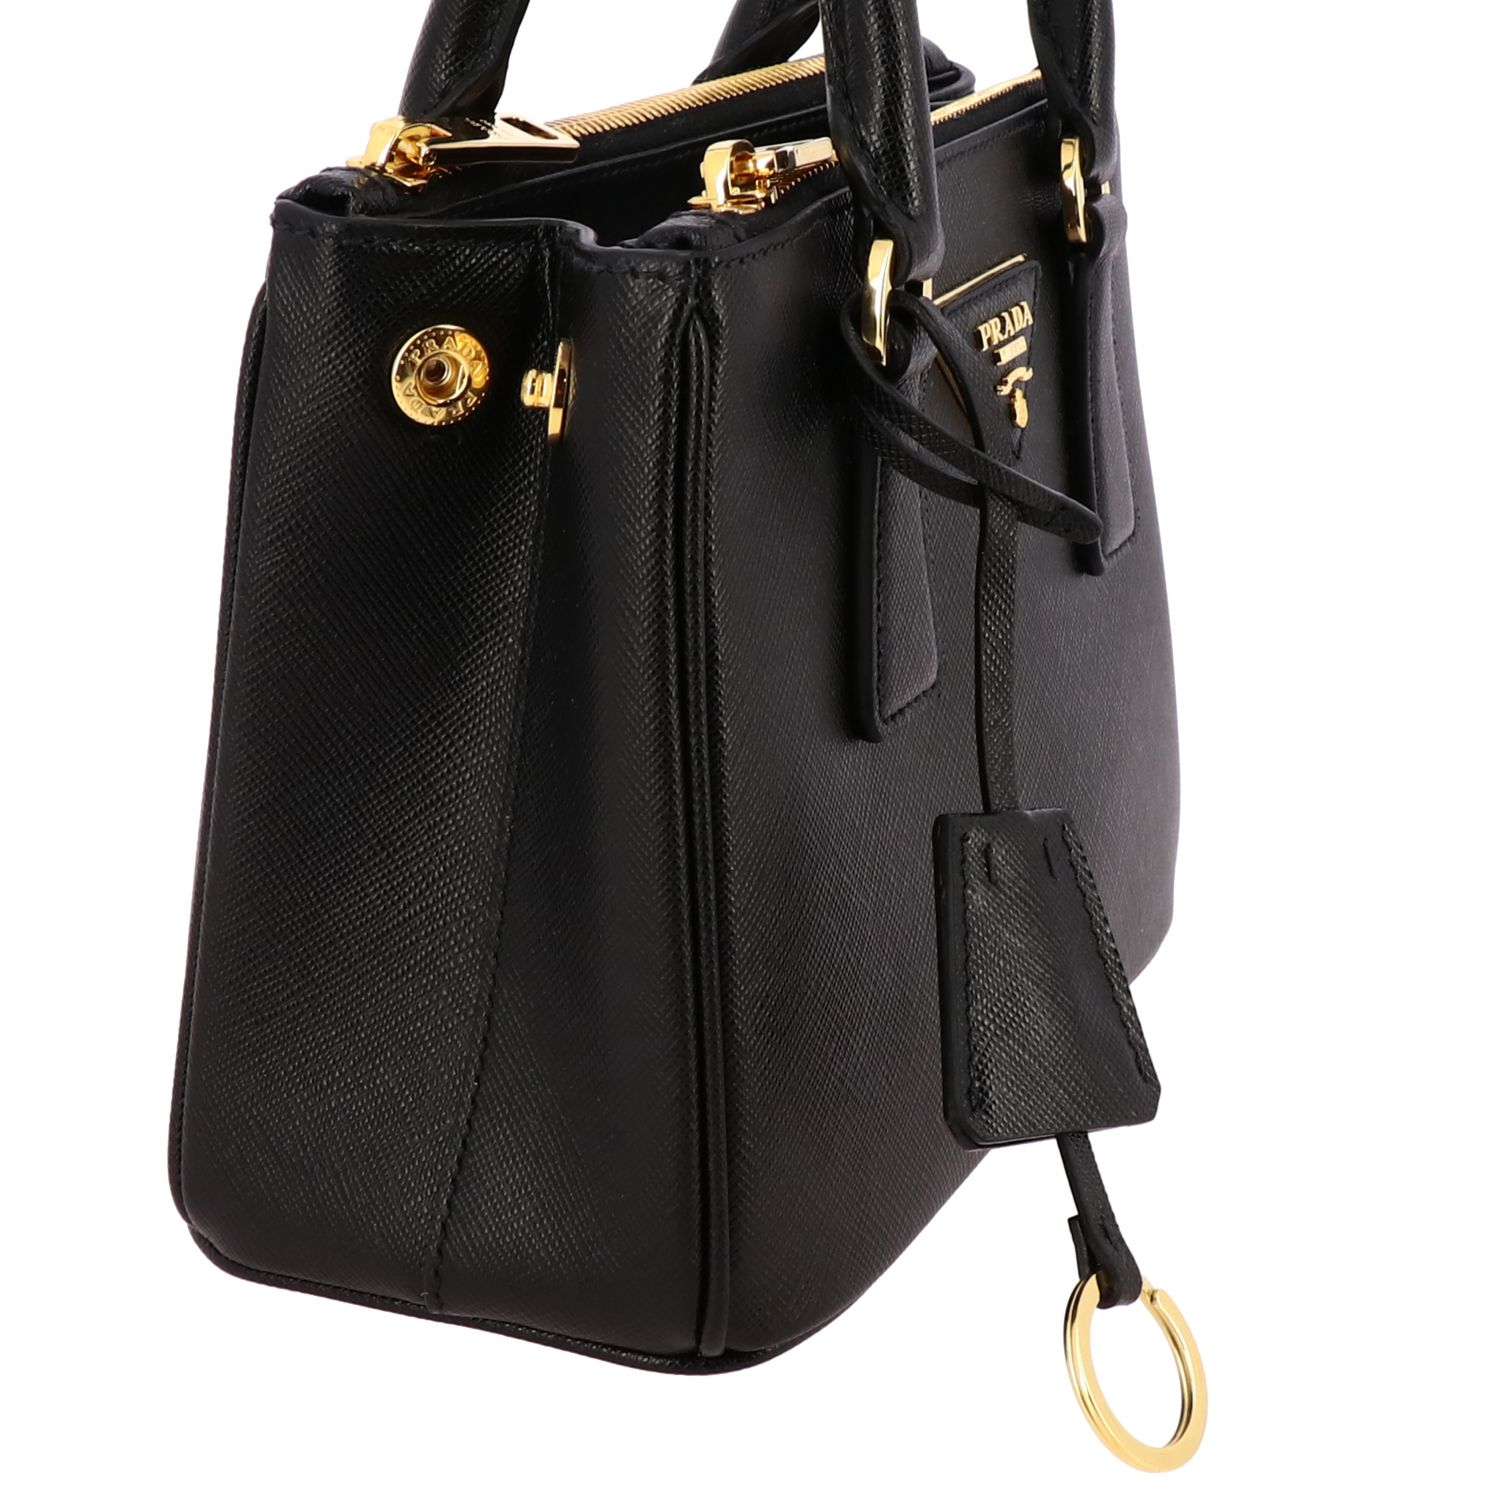 PRADA: Galleria bag in Saffiano leather with logo - Black | Prada mini ...